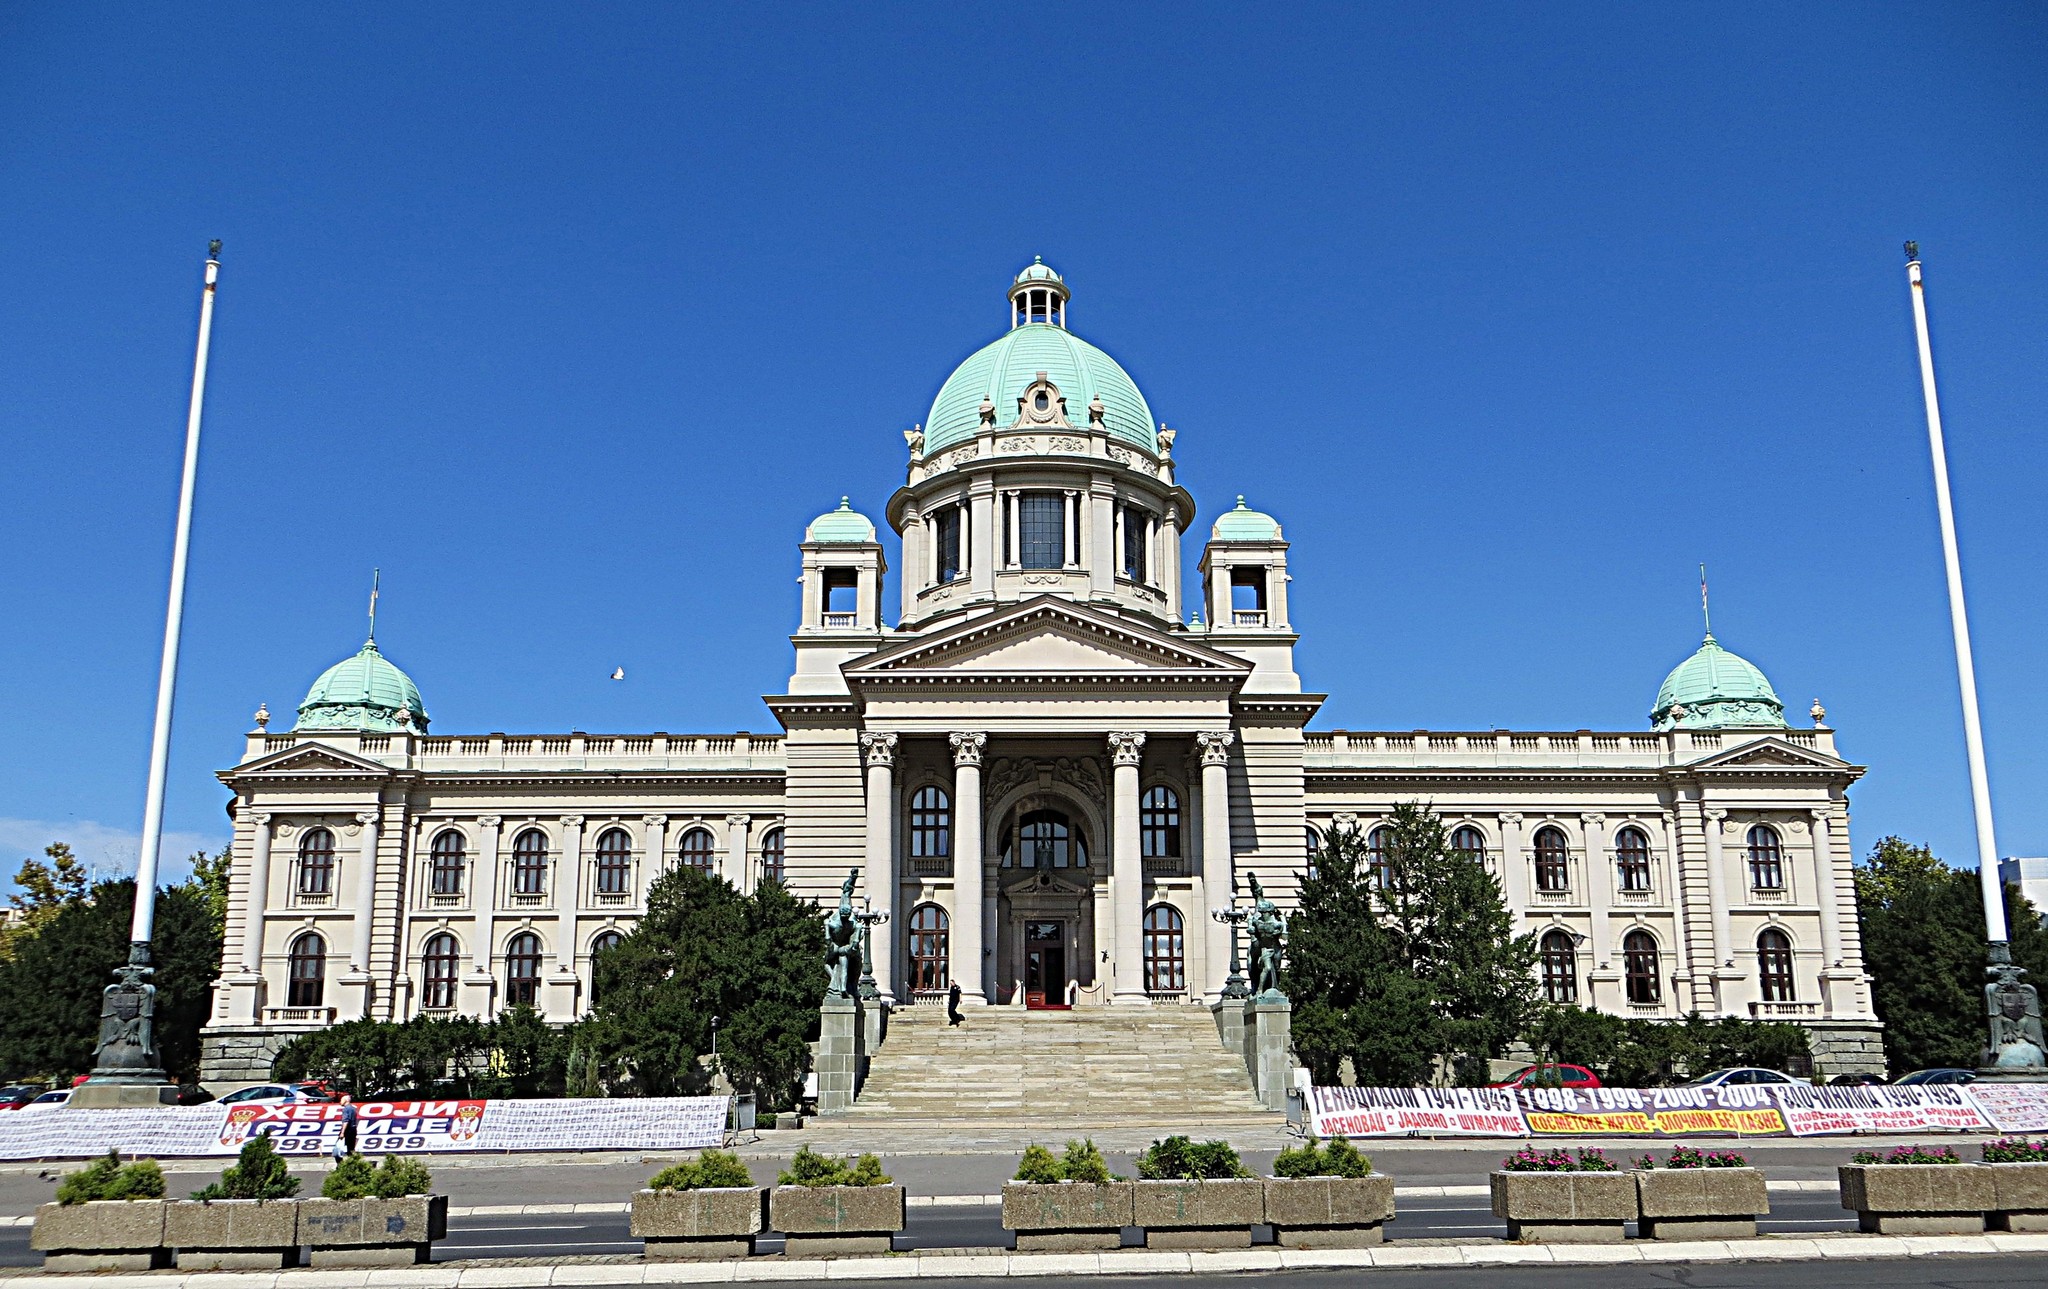 Serbian Parliament (Photo: Mister No, CC BY 3.0)